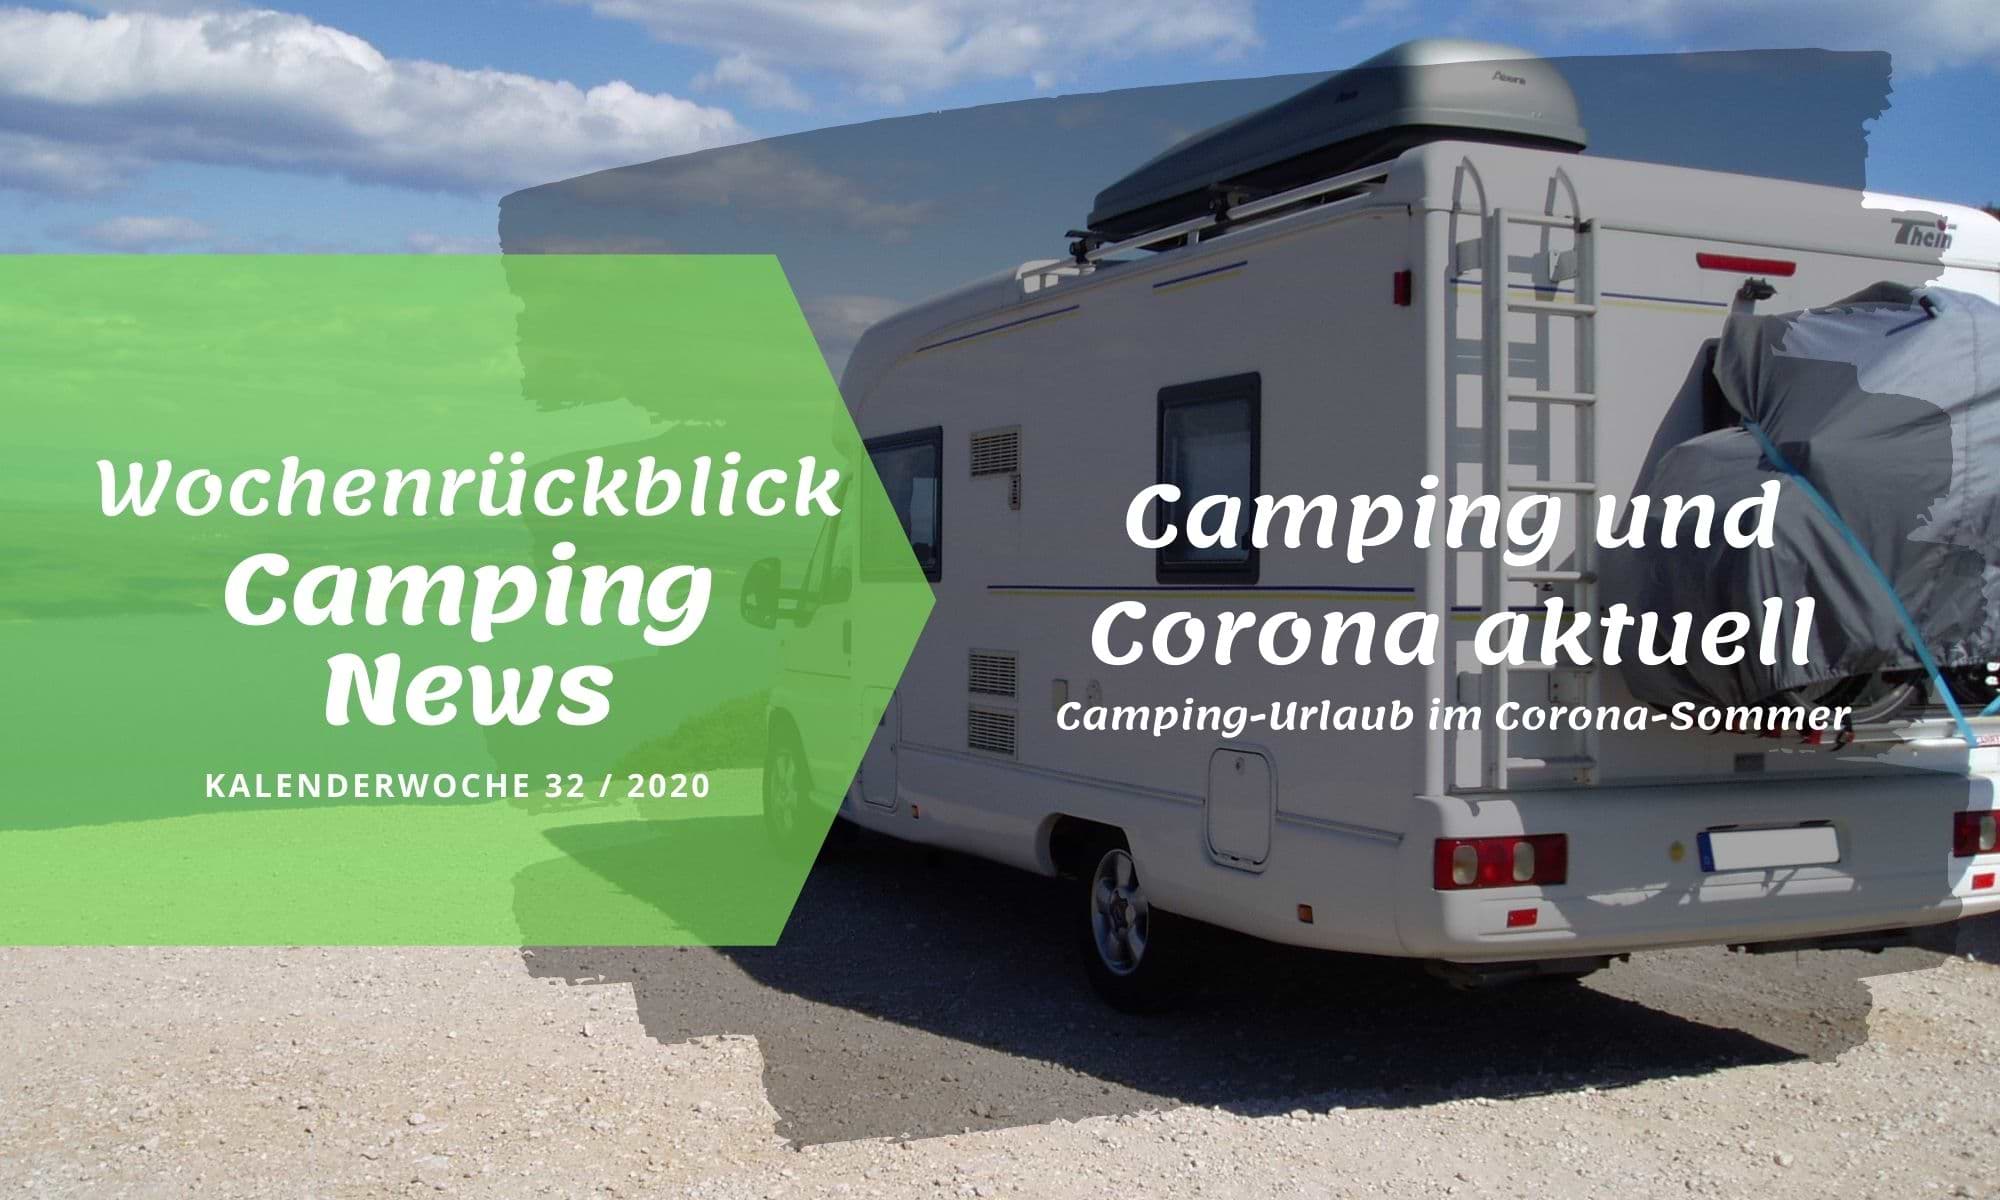 Camping und Corona aktuell